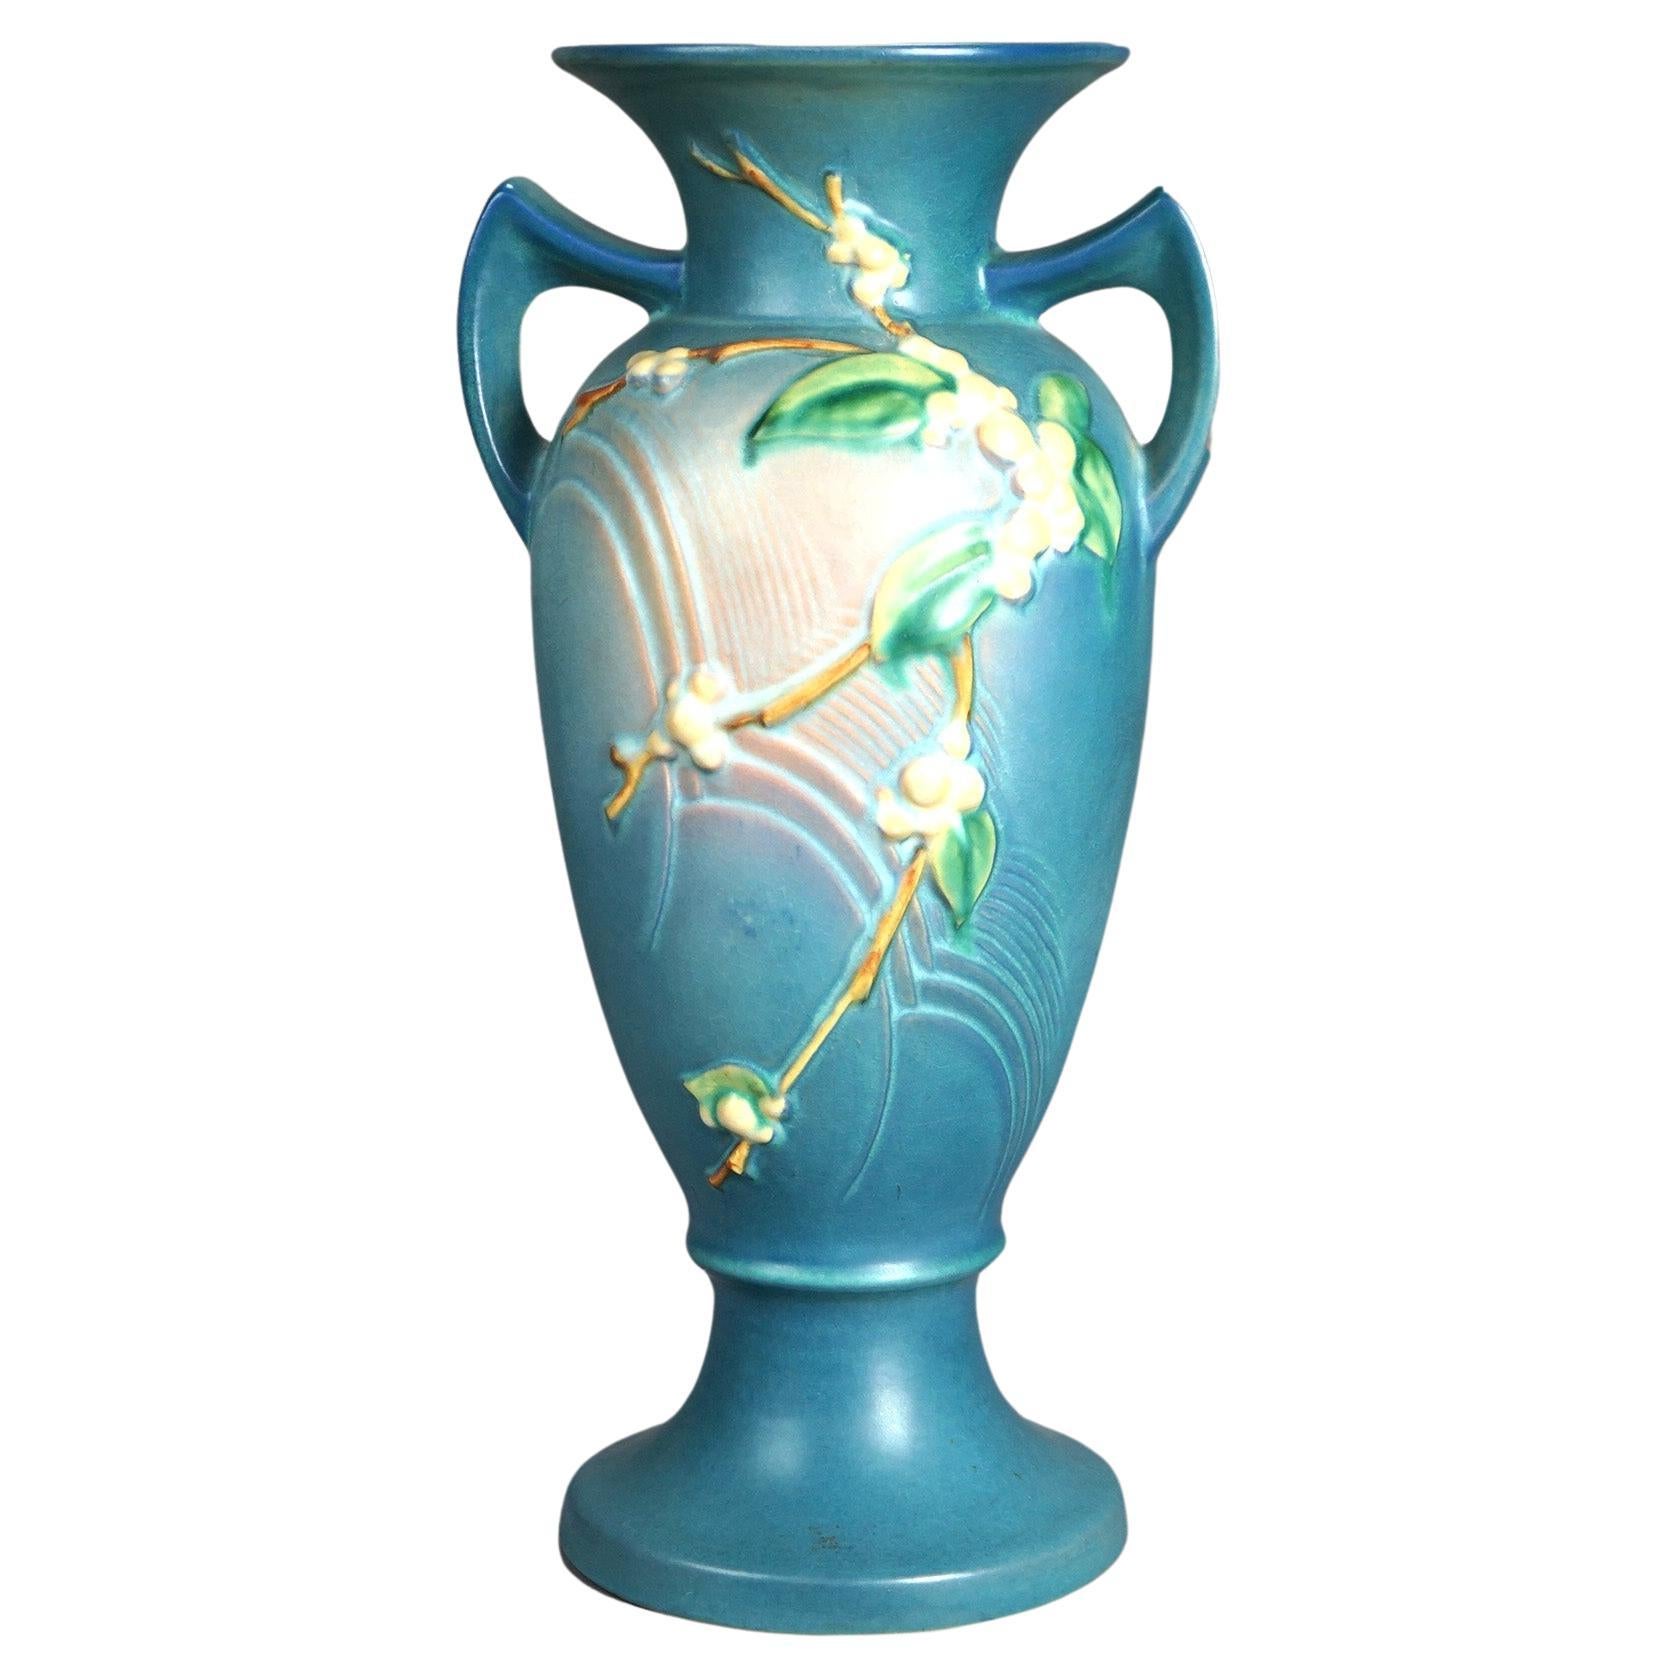 Antike Roseville-Schneefbeer-Kunstkeramik-Vase mit doppeltem Henkel, um 1940